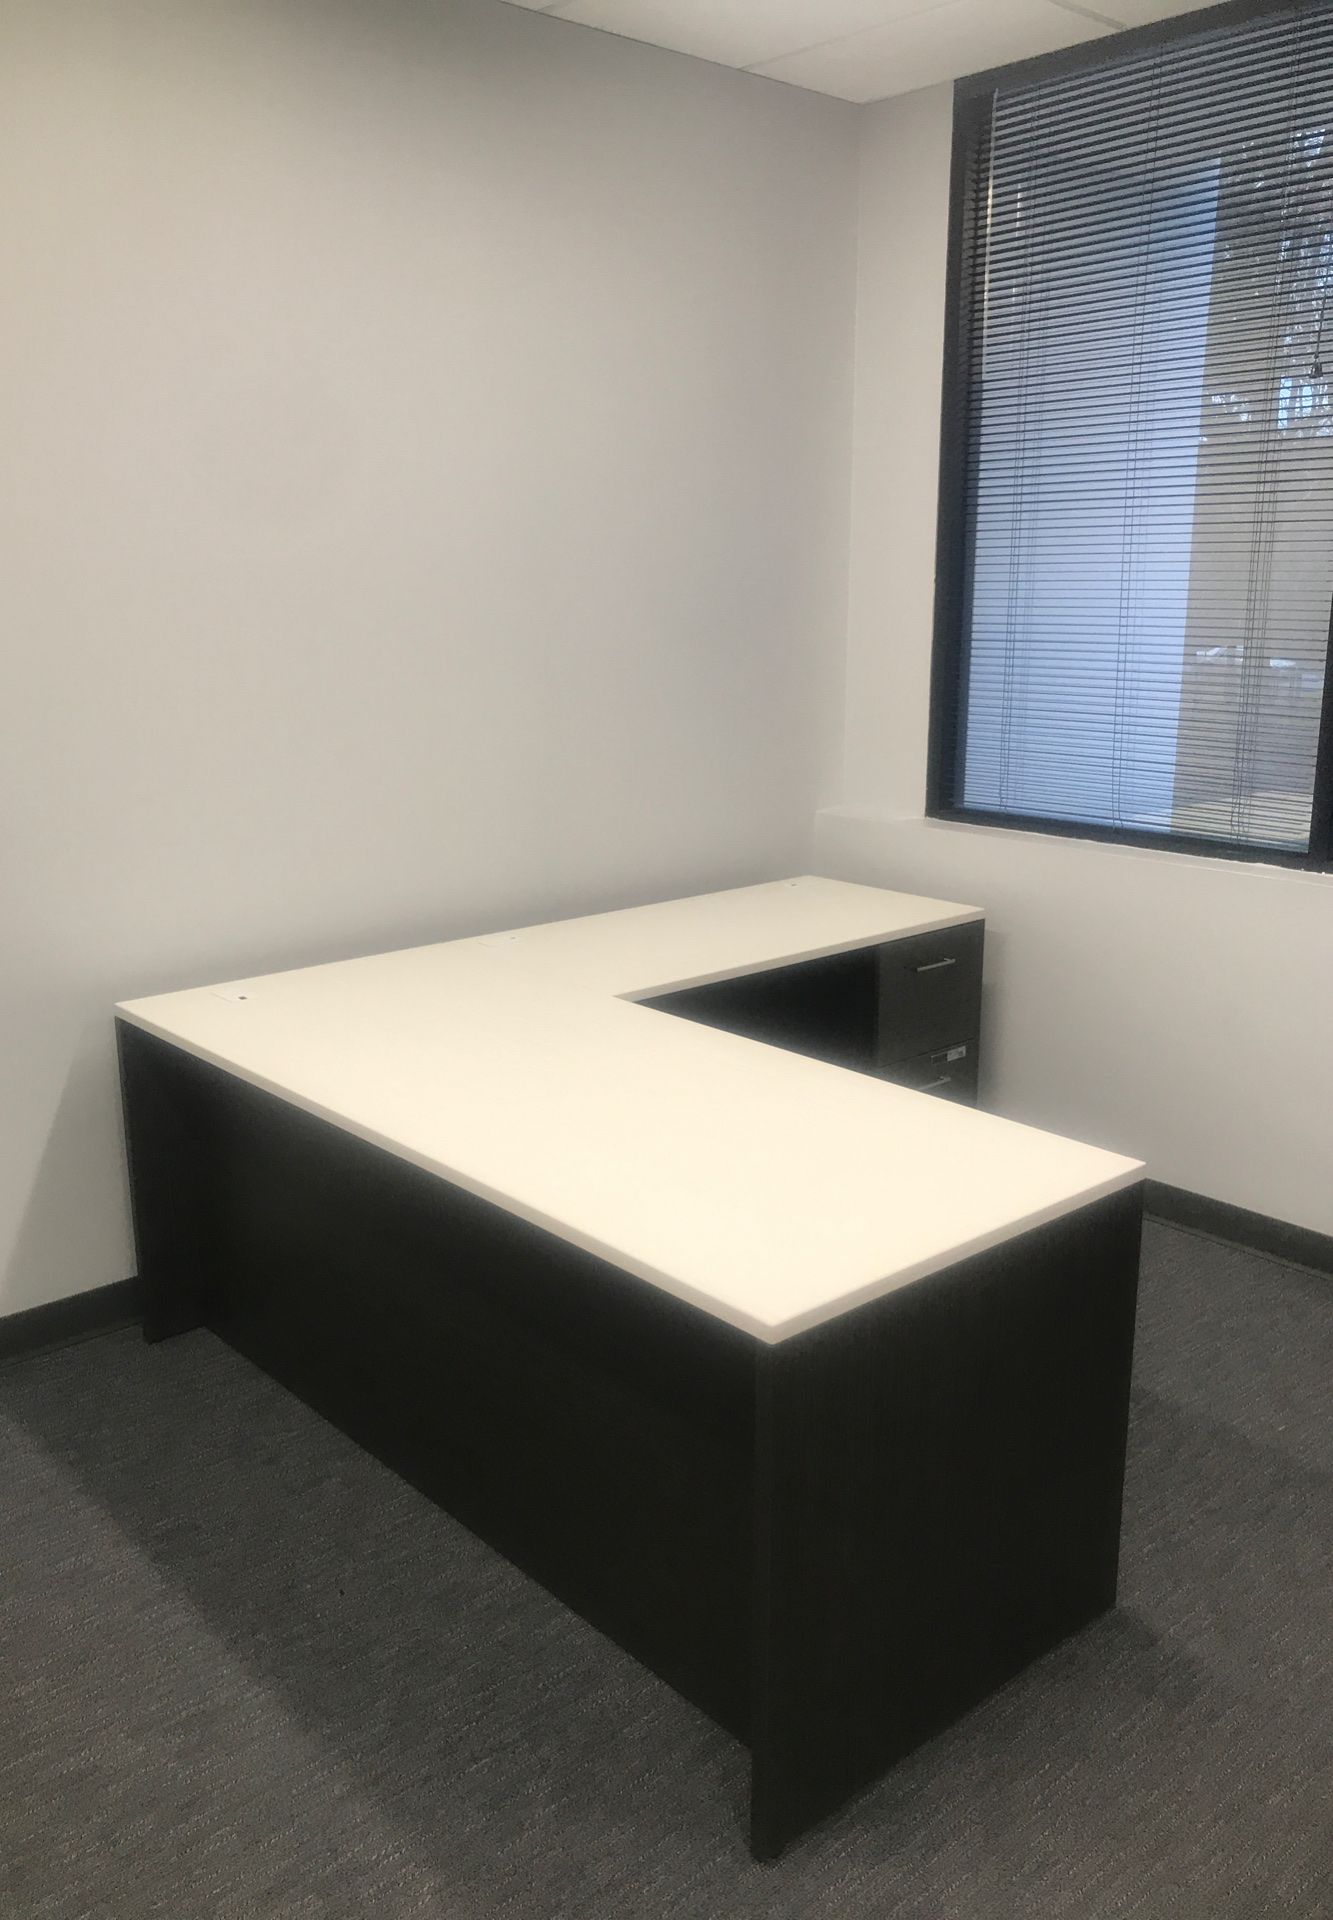 Artopex desk “NEW never uses”